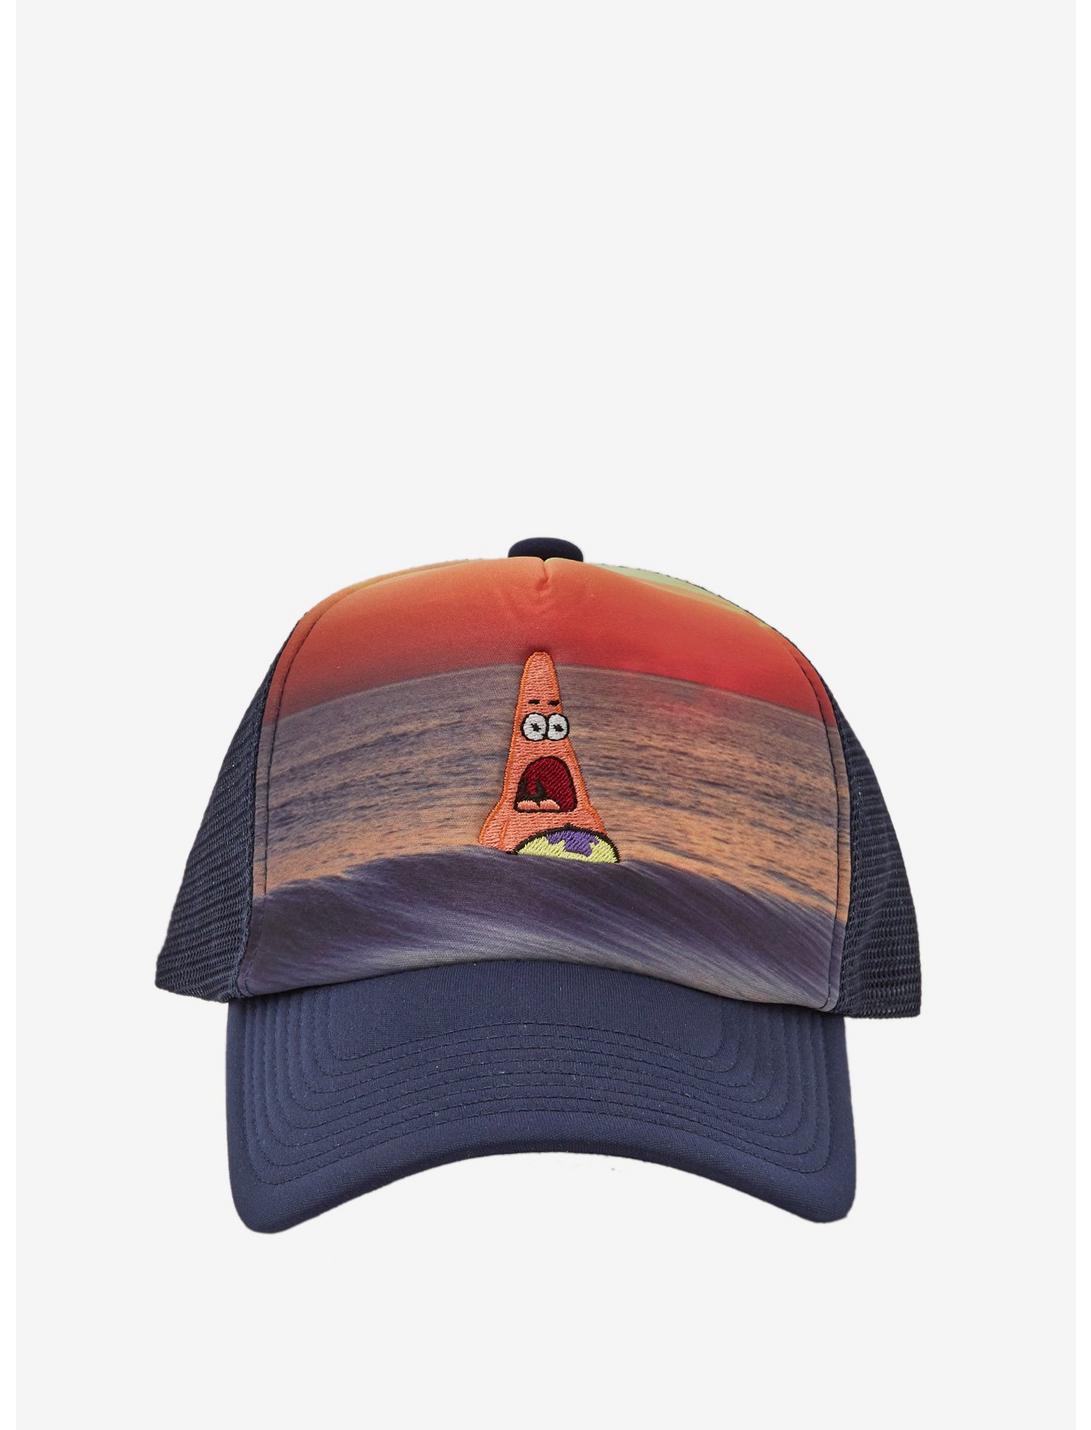 SpongeBob SquarePants Surprised Patrick Beach Trucker Hat, , hi-res